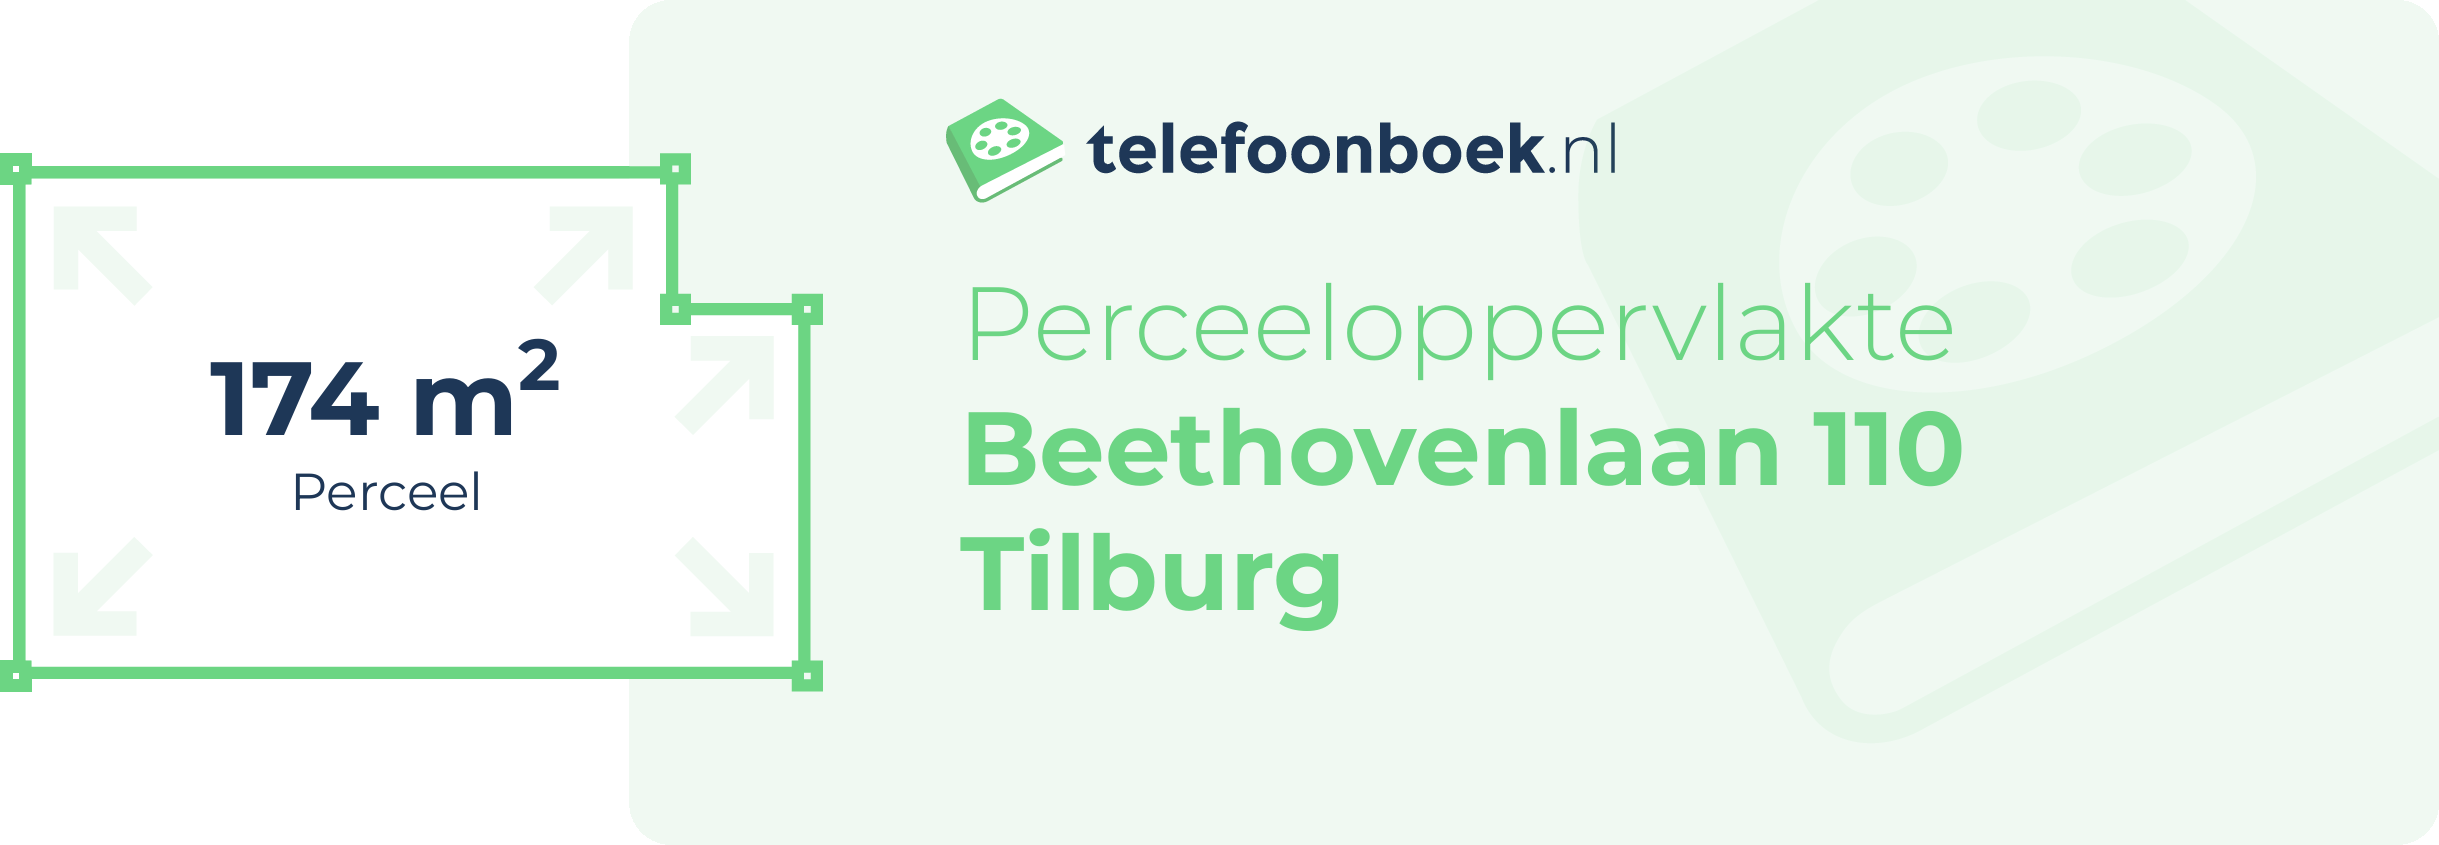 Perceeloppervlakte Beethovenlaan 110 Tilburg